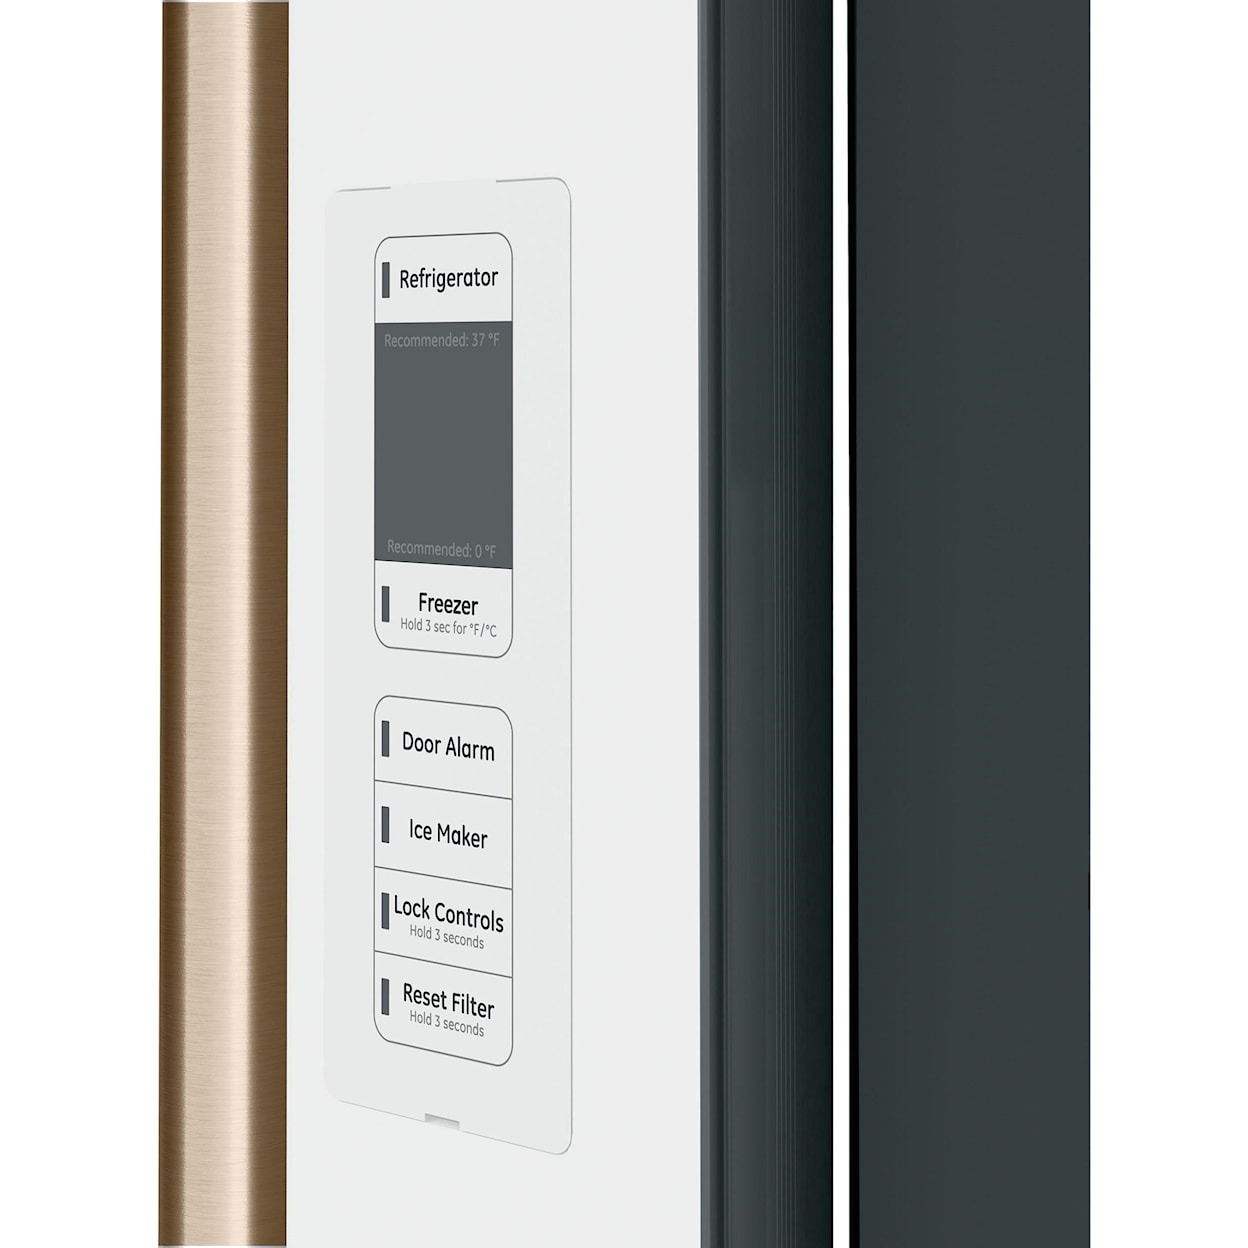 GE Appliances GE Cafe French Door Refigerators Cafe´™ ENERGY STAR® 23.1 Cu. Ft. Smart Count